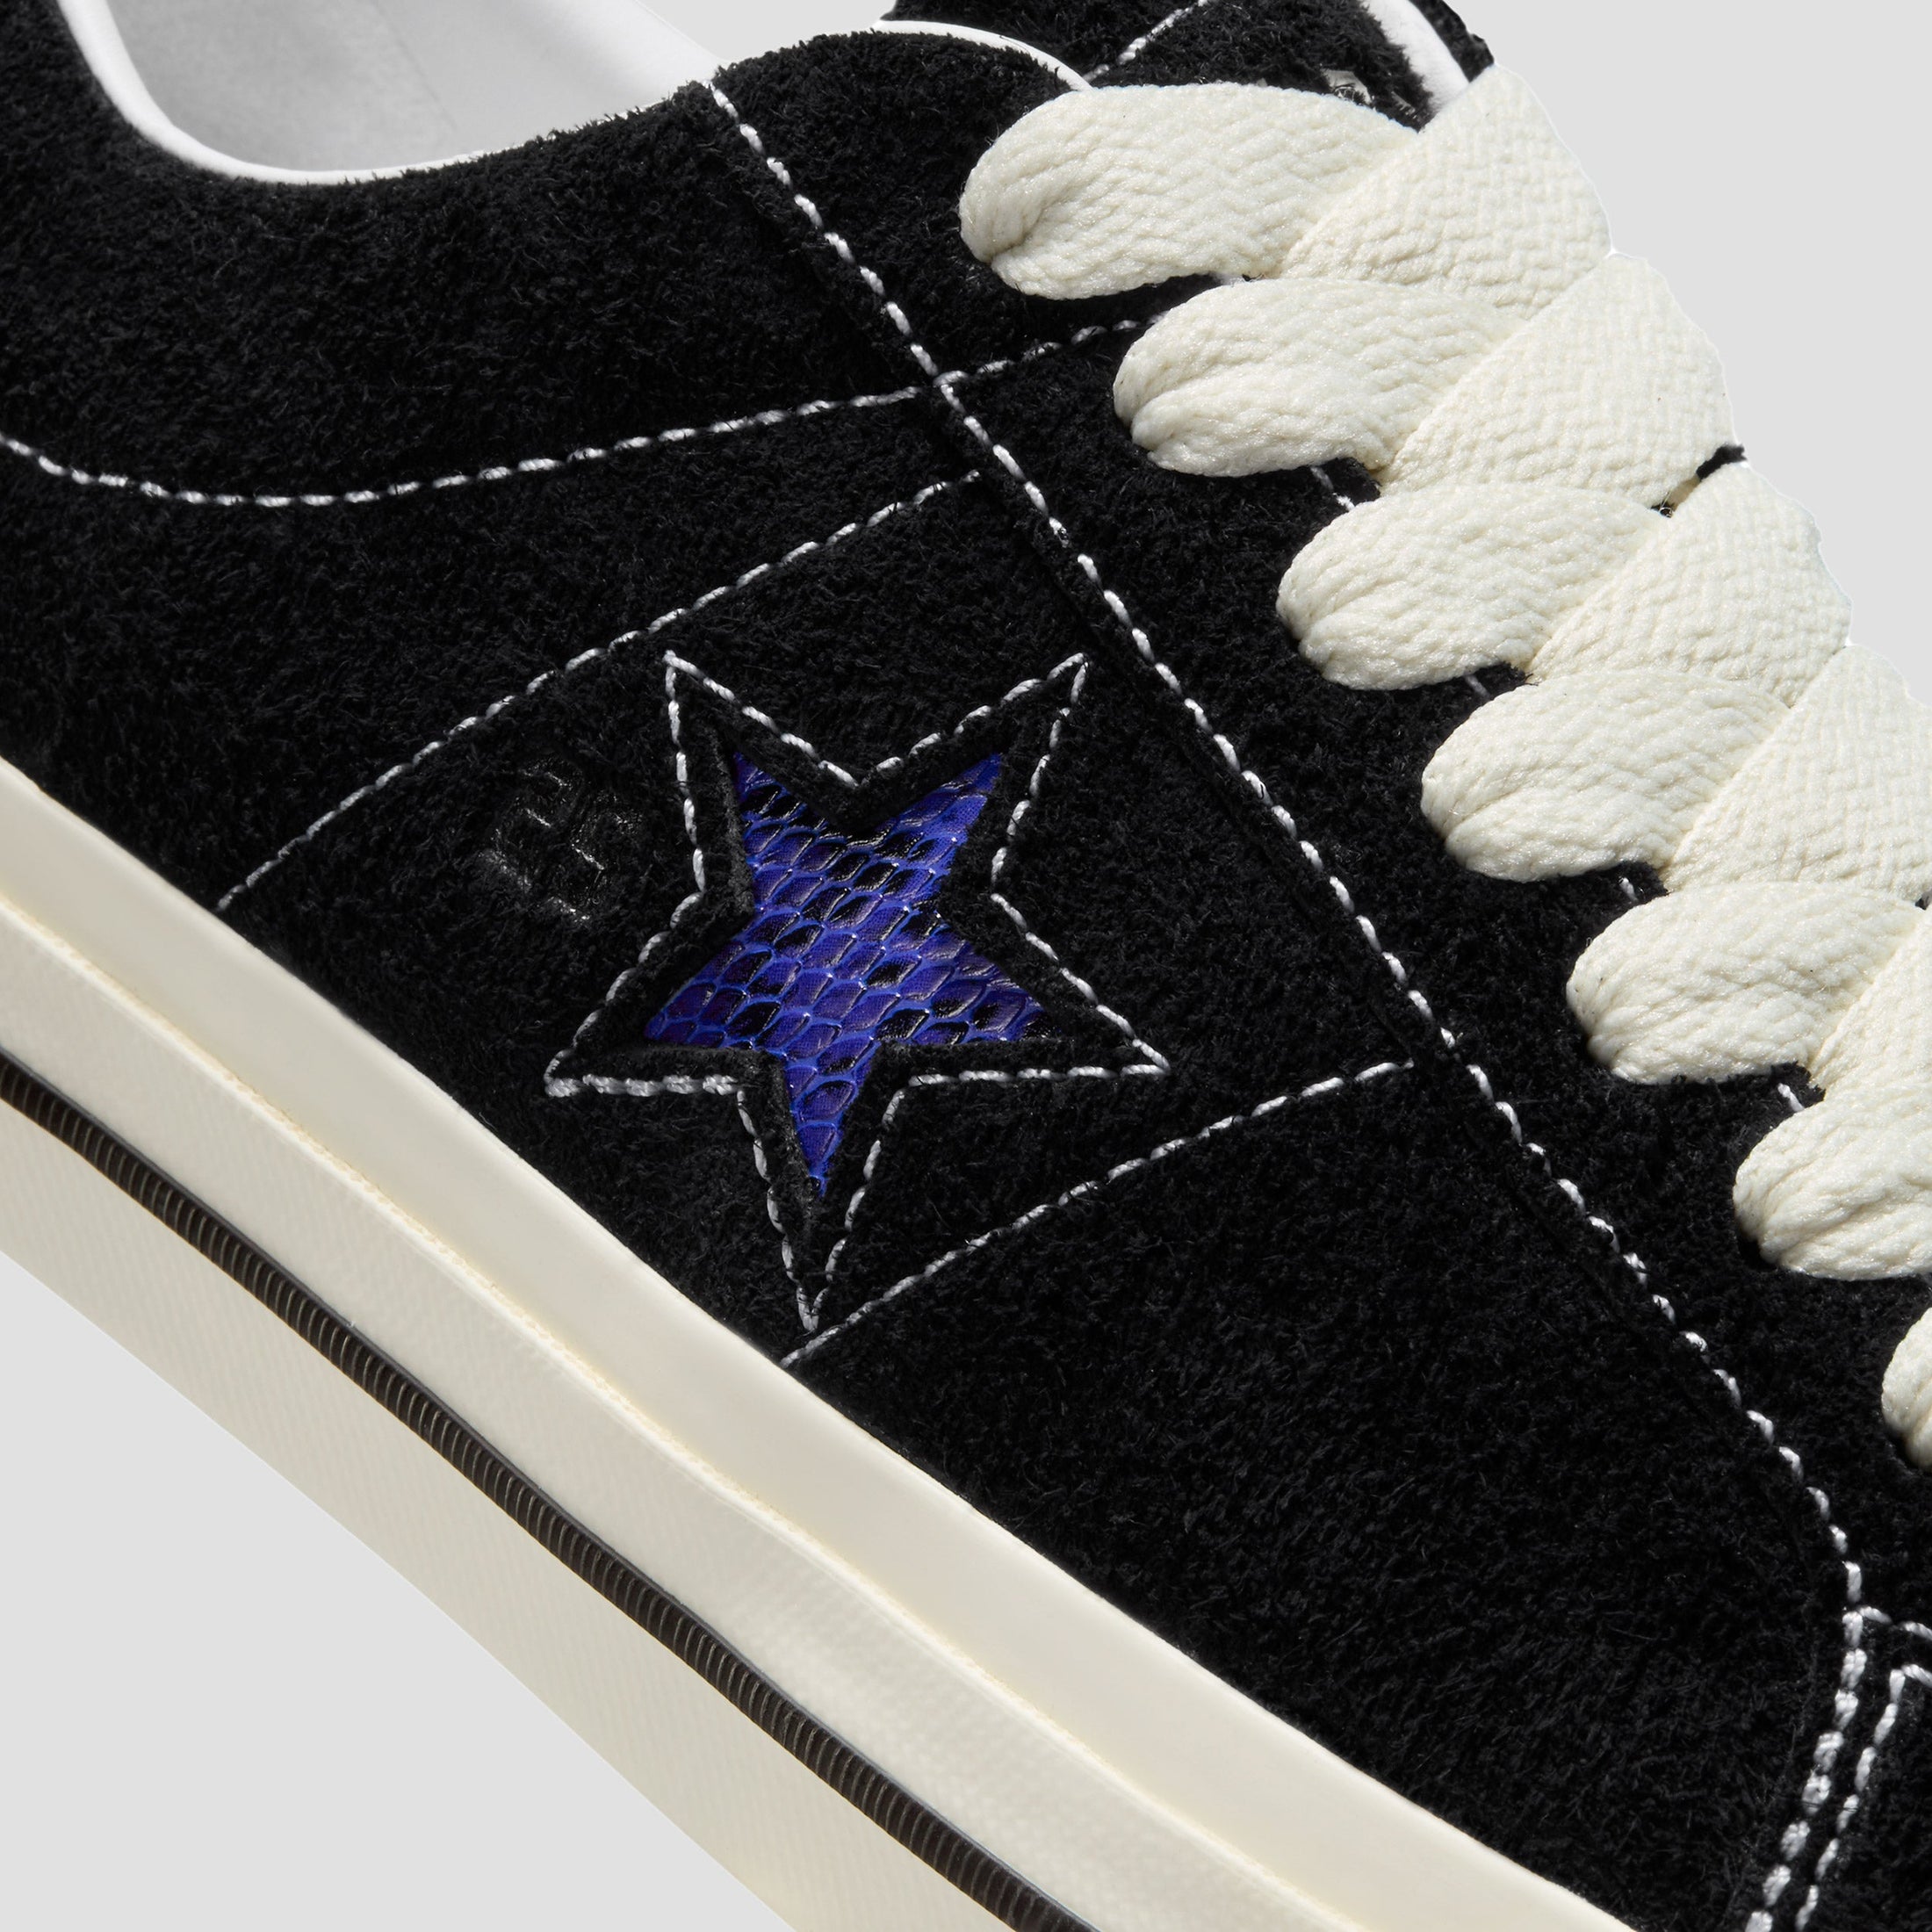 Converse Cons x Quartersnacks One Star Pro Ox Skate Shoes Black / Egret / Hyper Blue